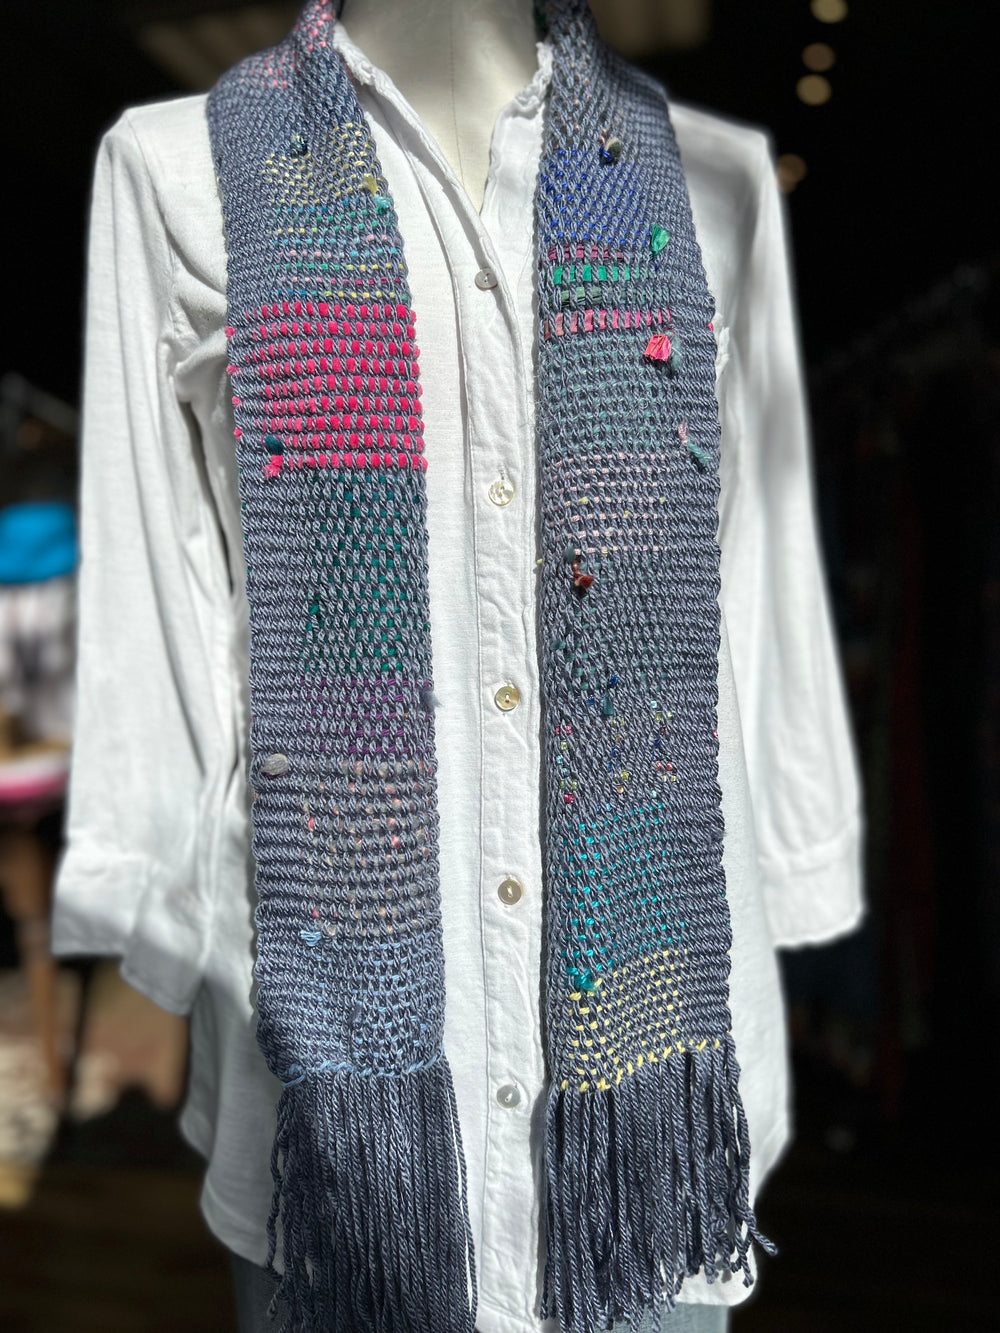 Natalie Reid scarf, narrow hand-woven fiber art